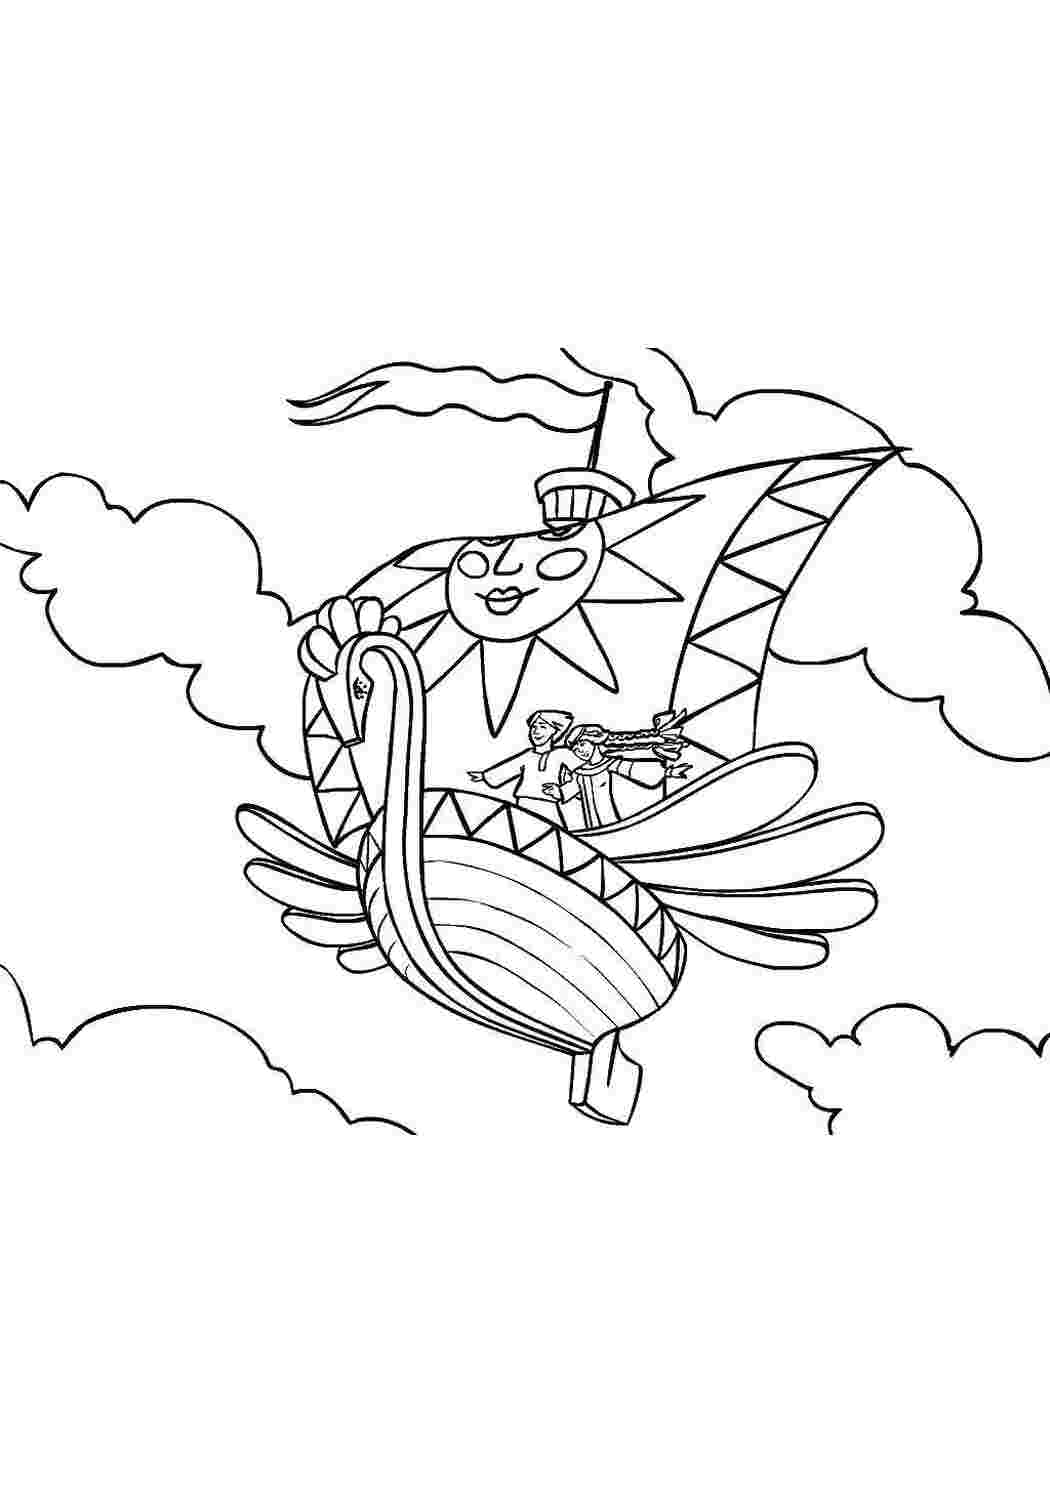 Рисунок на тему летучий корабль